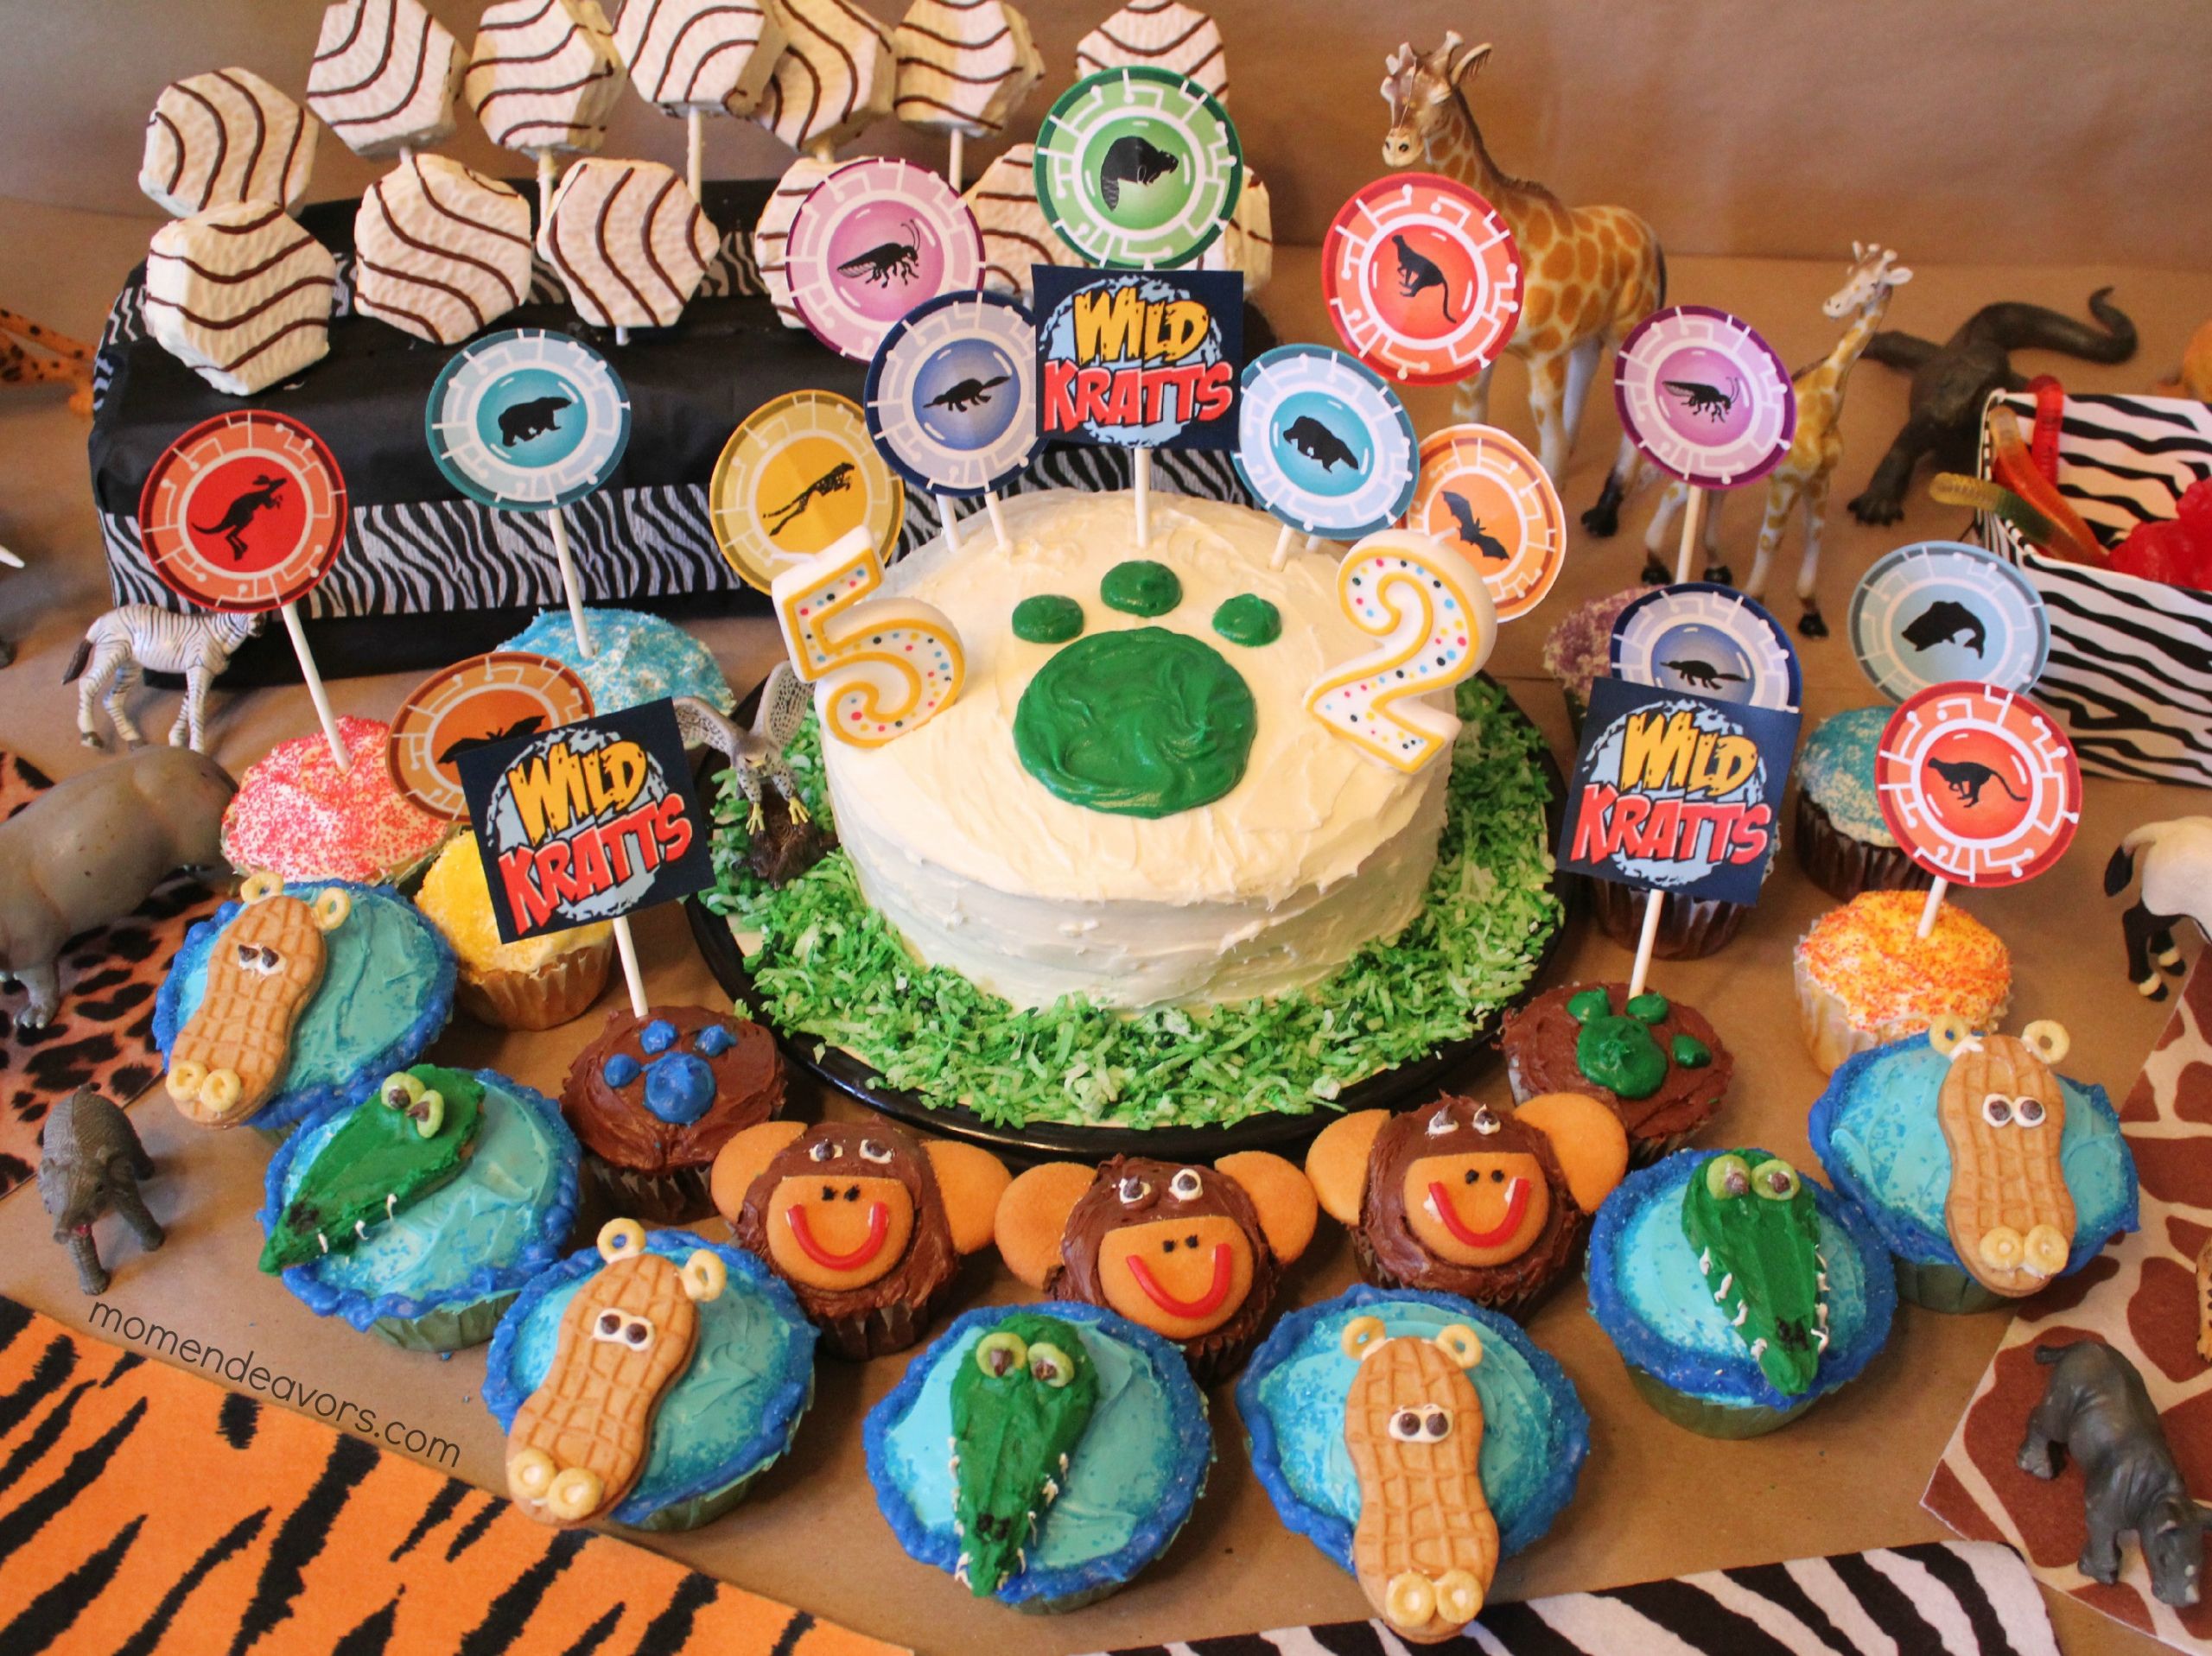 Wild Kratts Birthday Cake
 Top 10 posts of 2012